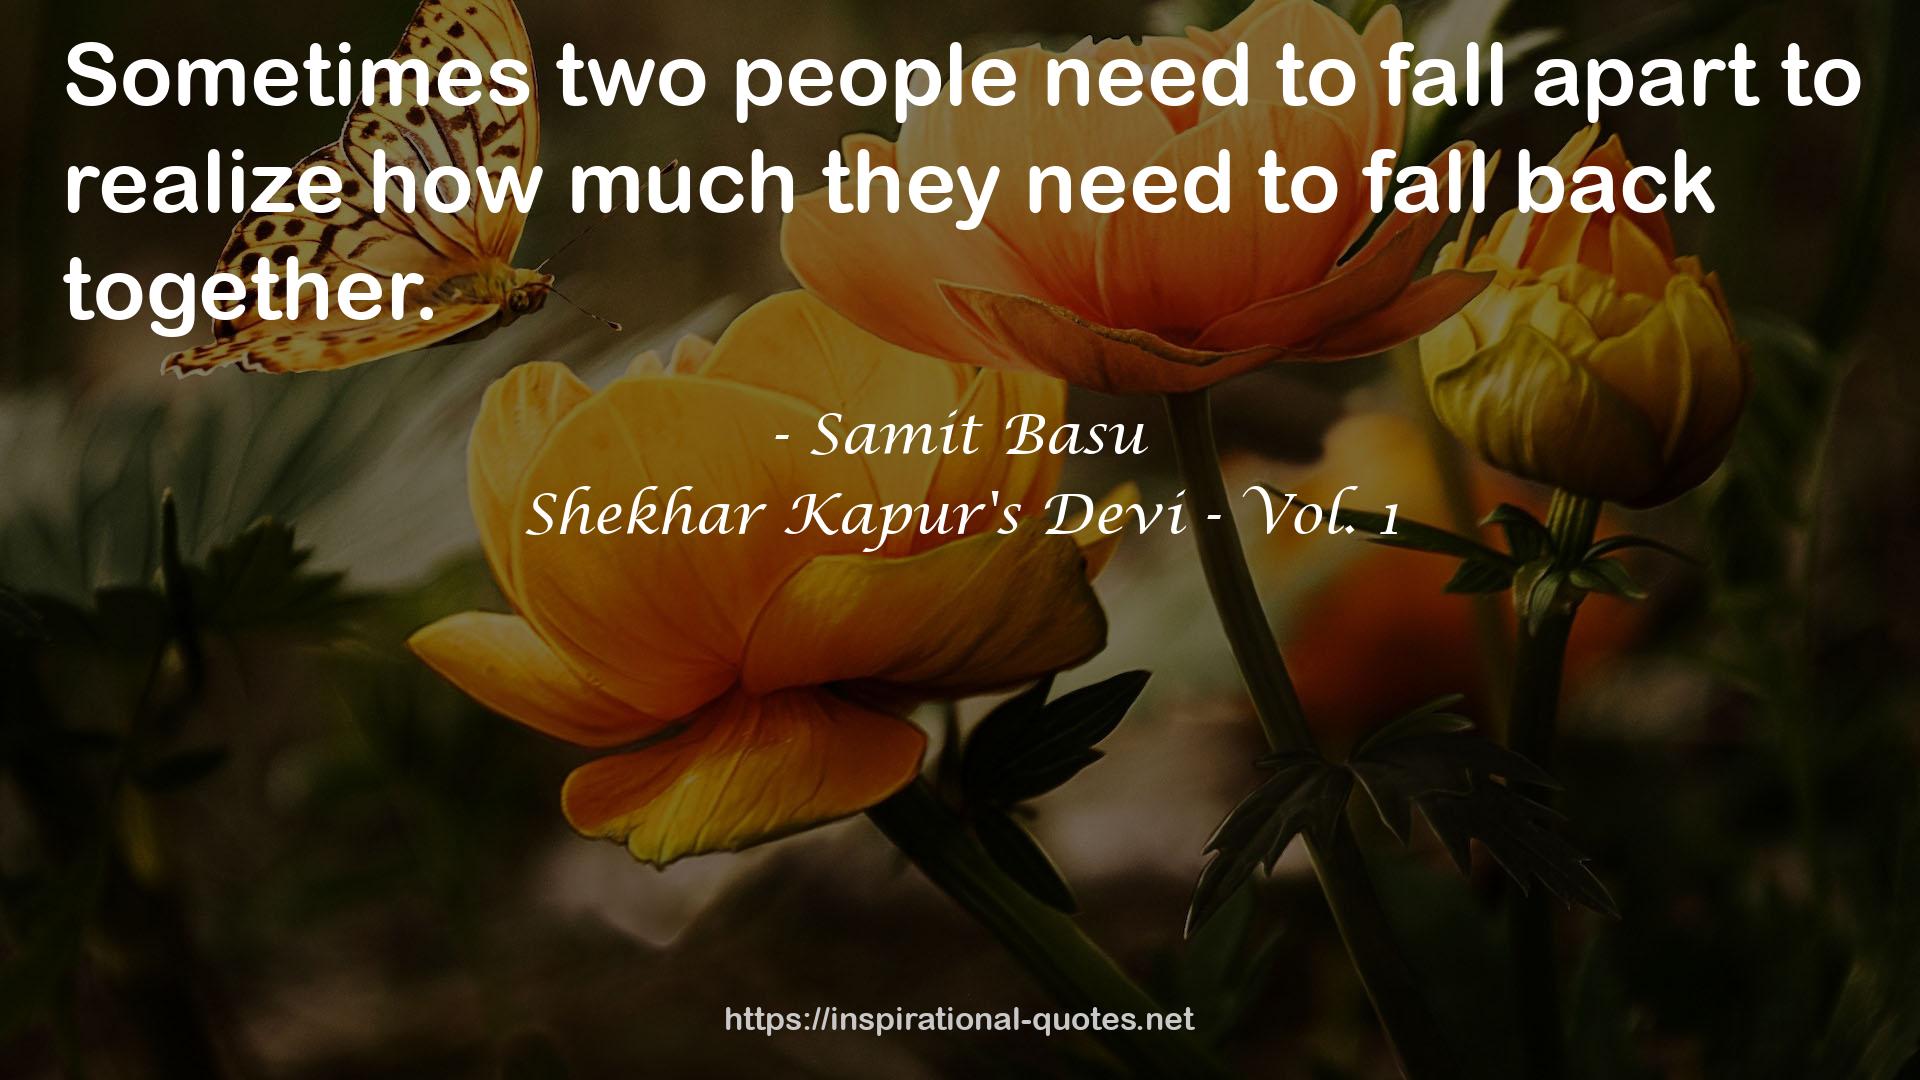 Shekhar Kapur's Devi - Vol. 1 QUOTES